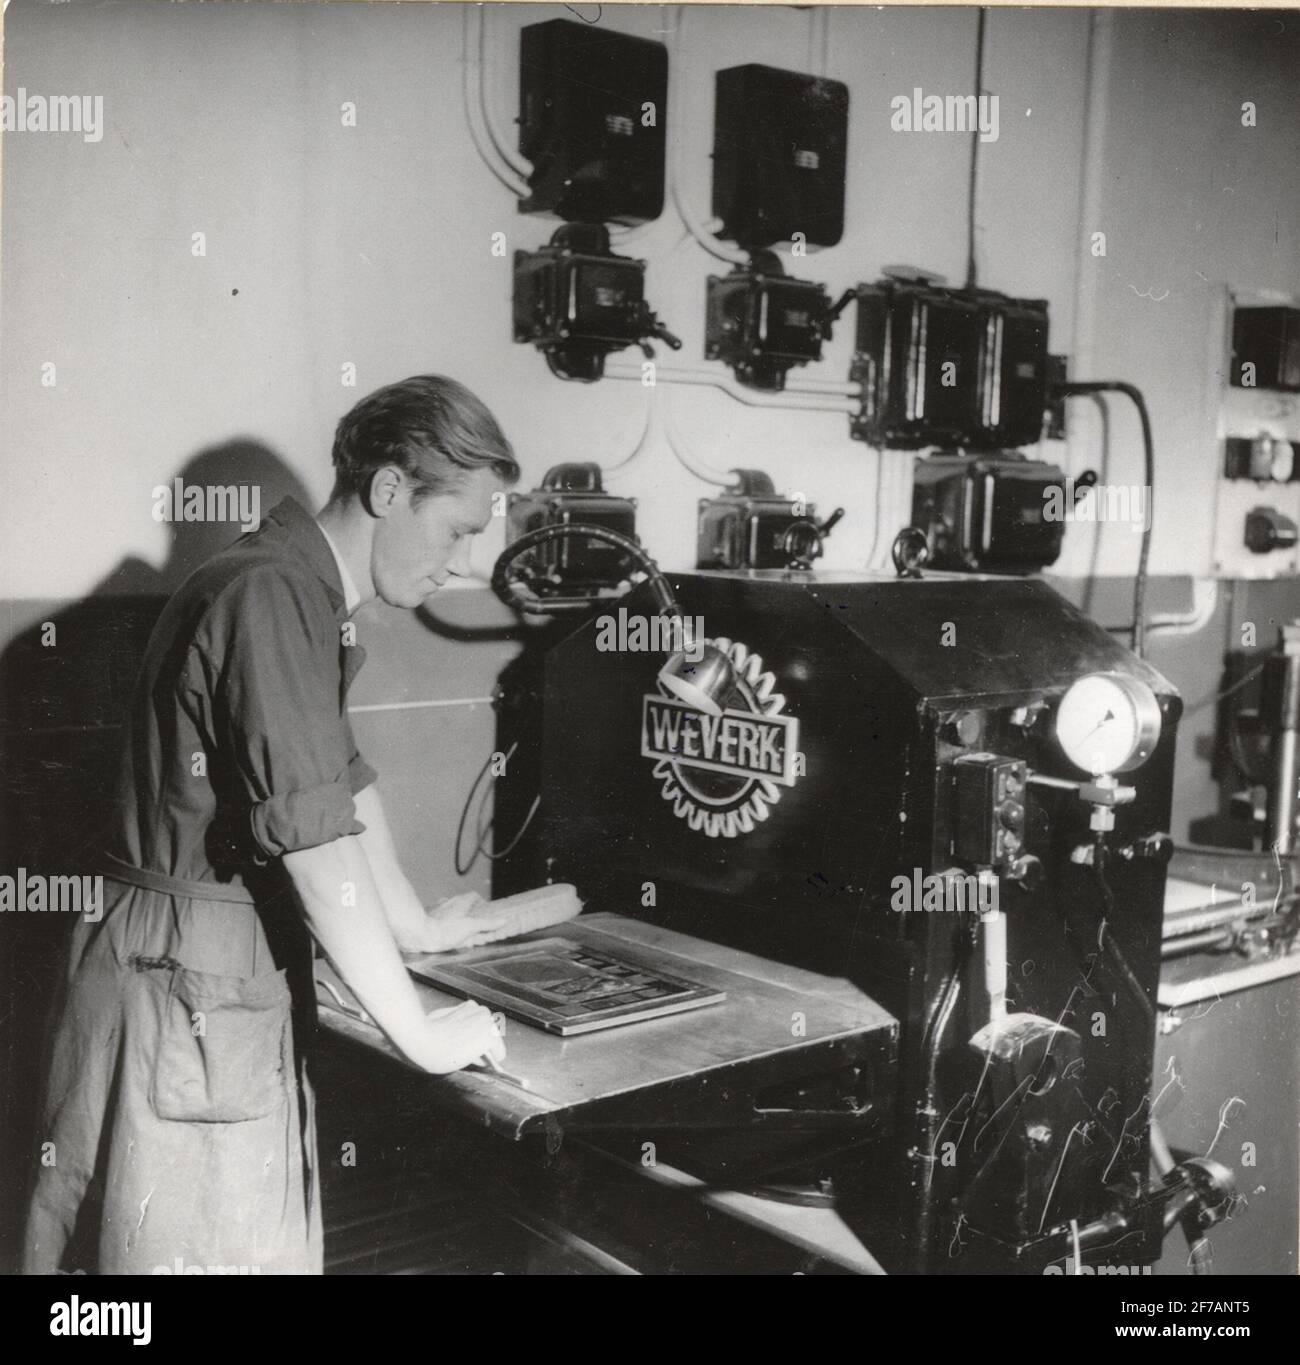 C.J. Wennbergs Mek. Workshop, Karlstad, 1944. 180 Ton's Prägepresse. Stockfoto